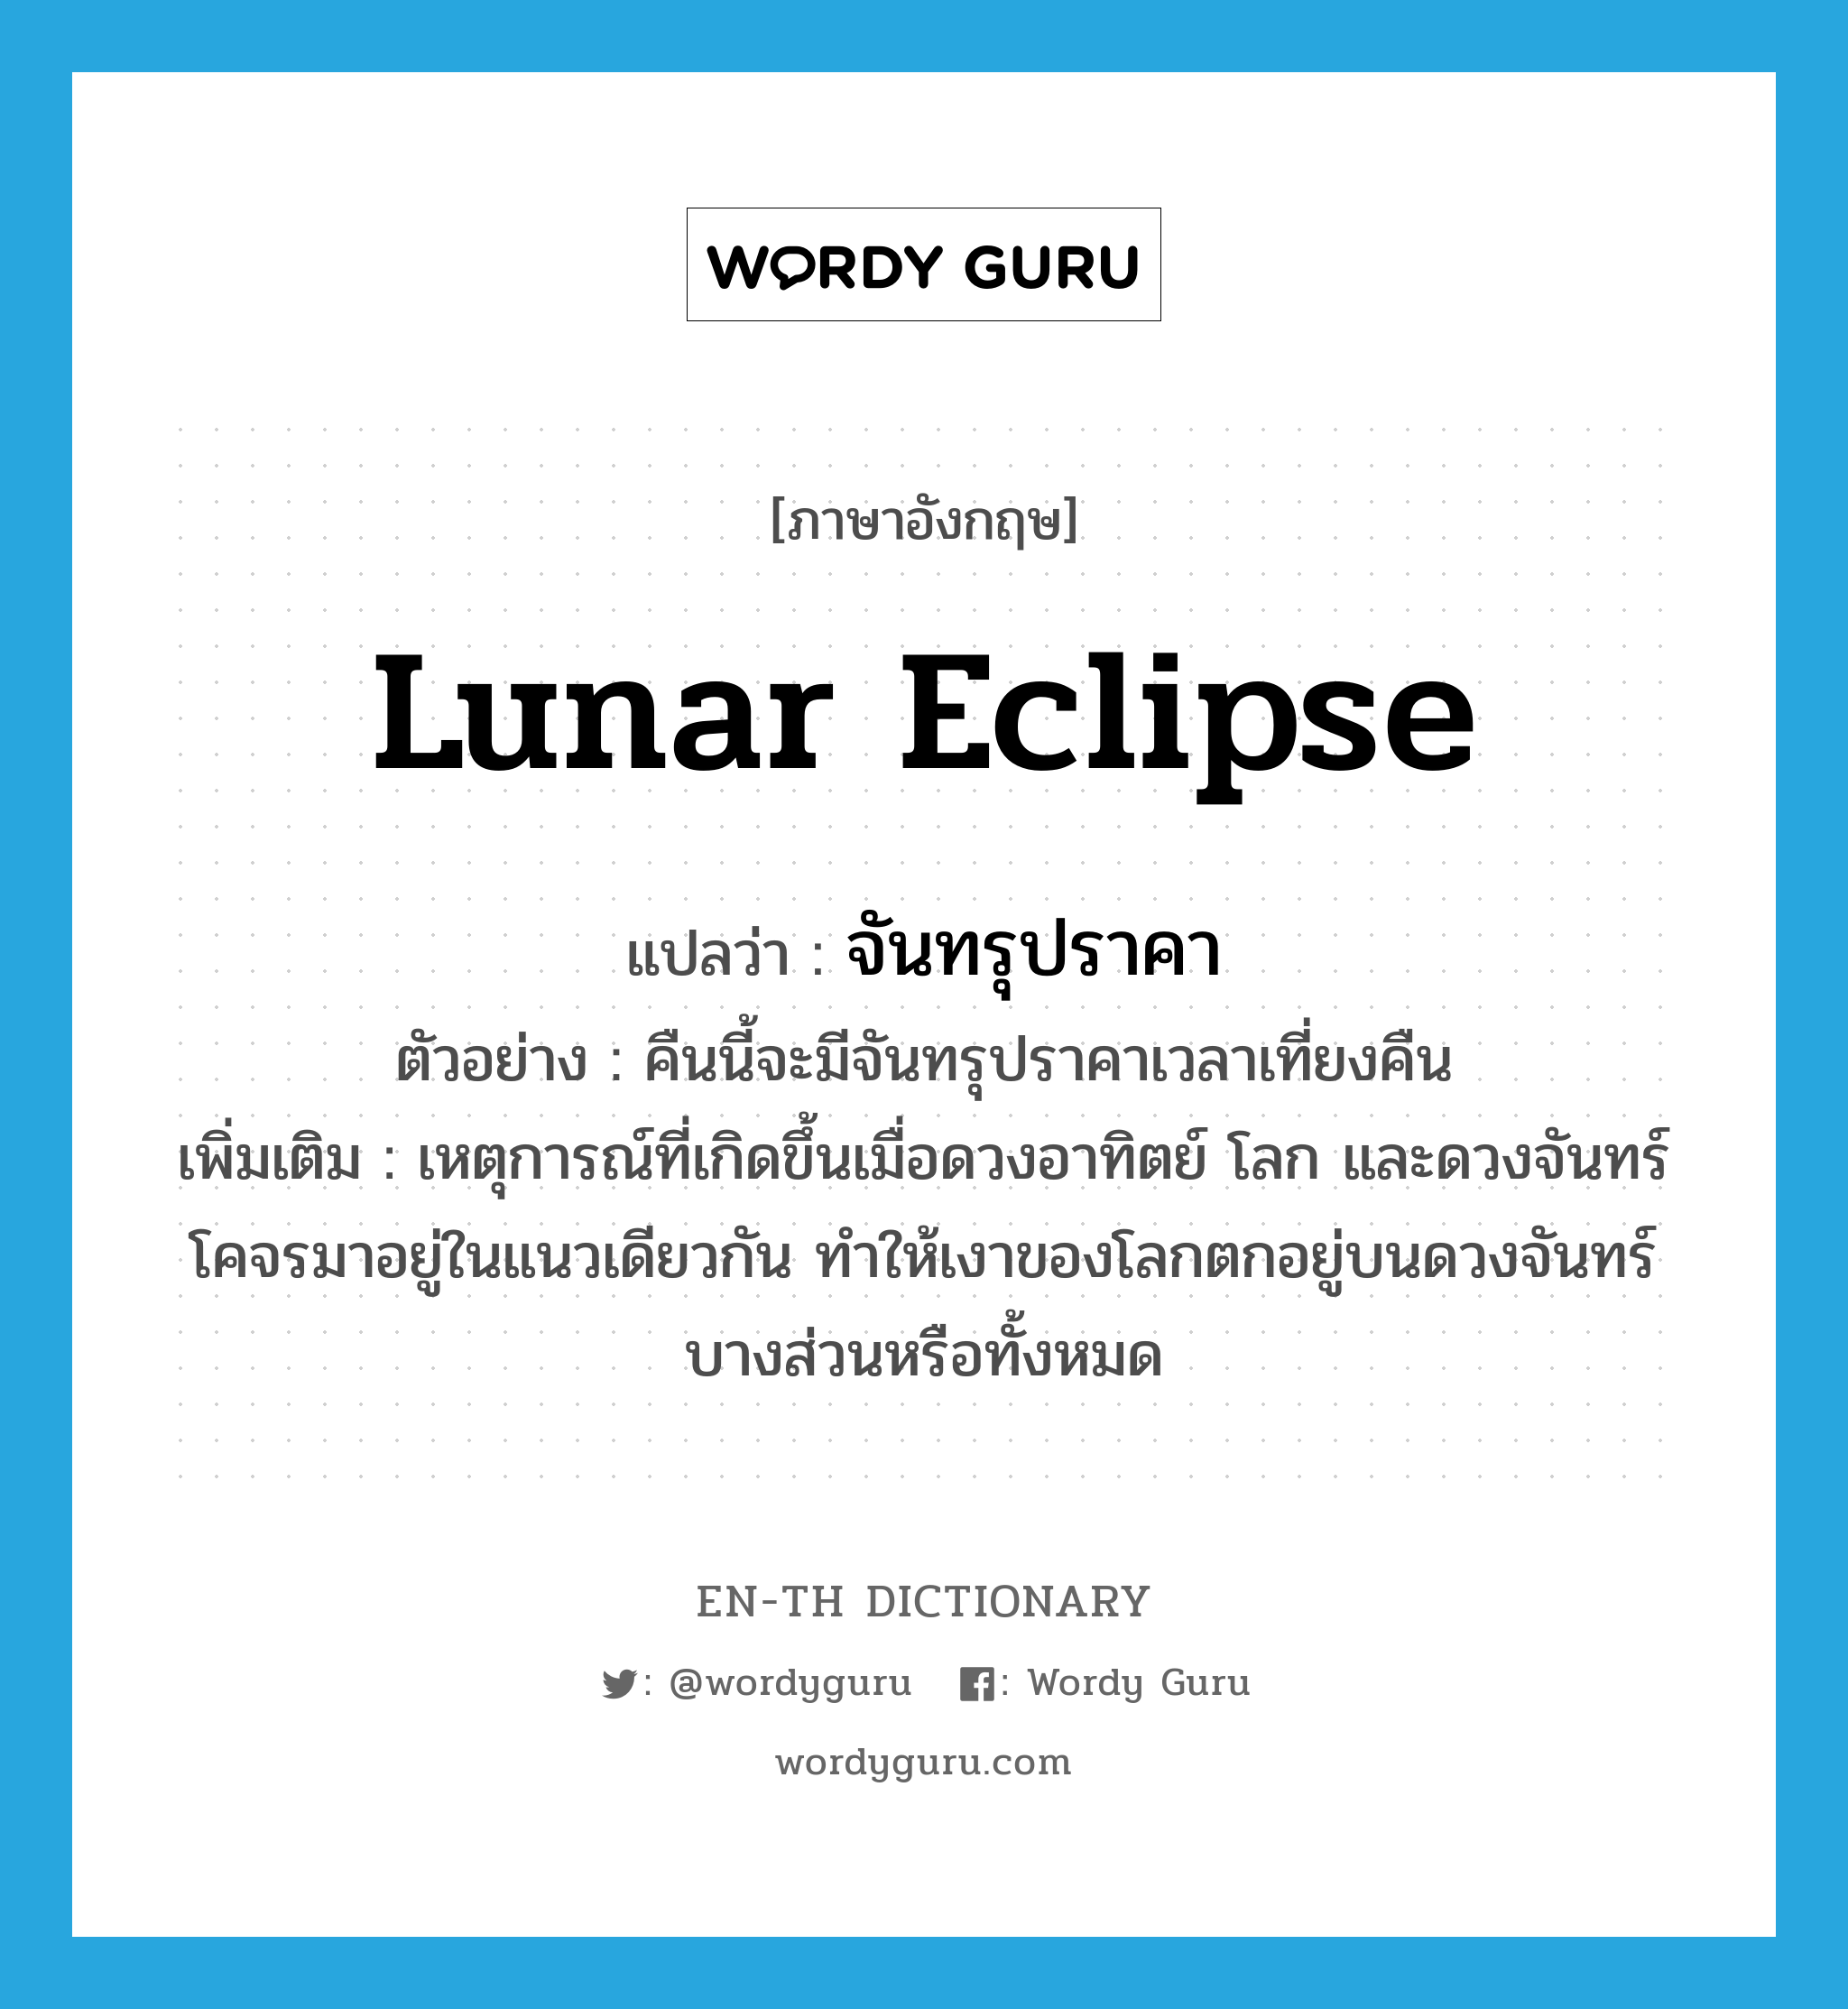 lunar eclipse แปลว่า?, คำศัพท์ภาษาอังกฤษ lunar eclipse แปลว่า จันทรุปราคา ประเภท N ตัวอย่าง คืนนี้จะมีจันทรุปราคาเวลาเที่ยงคืน เพิ่มเติม เหตุการณ์ที่เกิดขึ้นเมื่อดวงอาทิตย์ โลก และดวงจันทร์ โคจรมาอยู่ในแนวเดียวกัน ทำให้เงาของโลกตกอยู่บนดวงจันทร์บางส่วนหรือทั้งหมด หมวด N